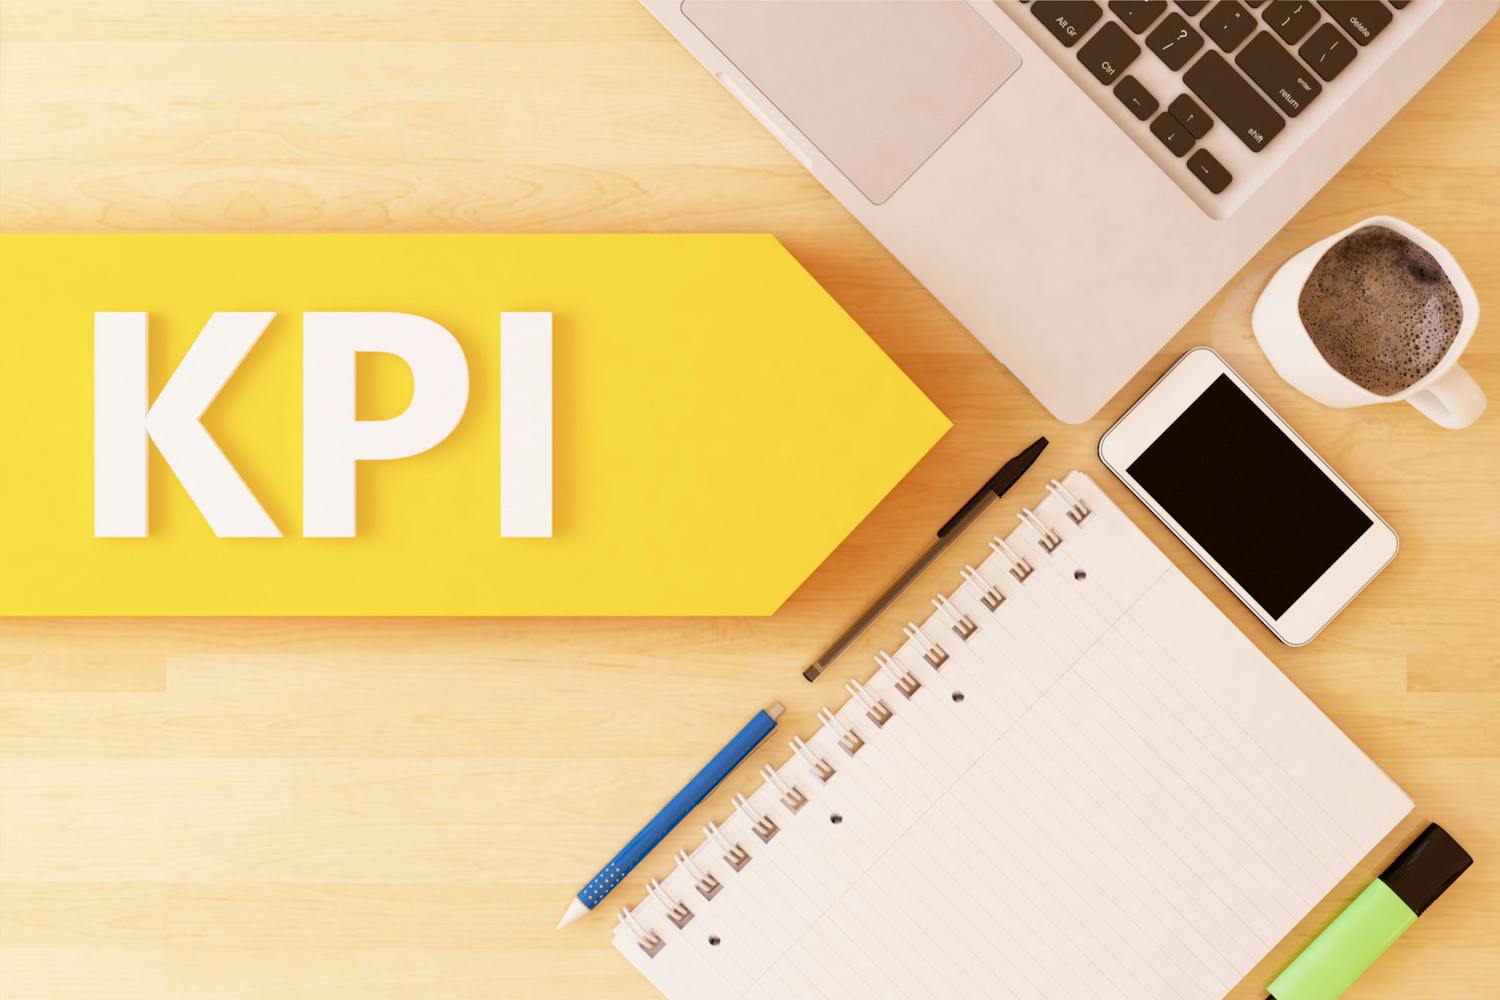 En gul pil med "KPI" i på et bord med notatblokk, penner, mobil, kaffe og laptop